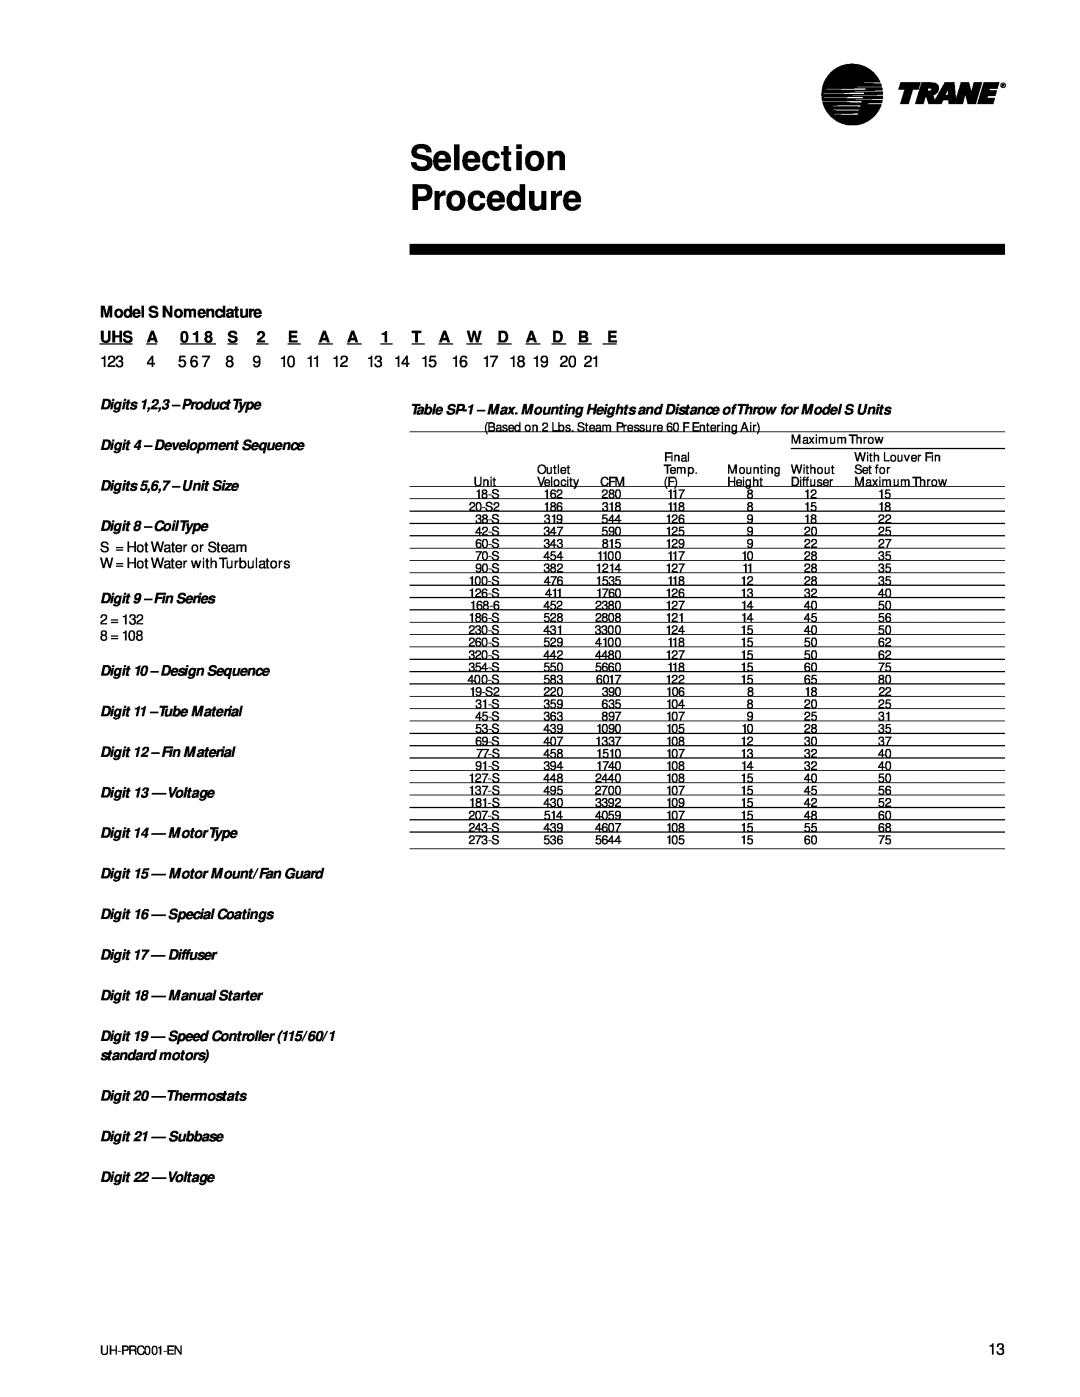 Trane UH-PRC001-EN manual Model S Nomenclature, D Be, Selection Procedure 